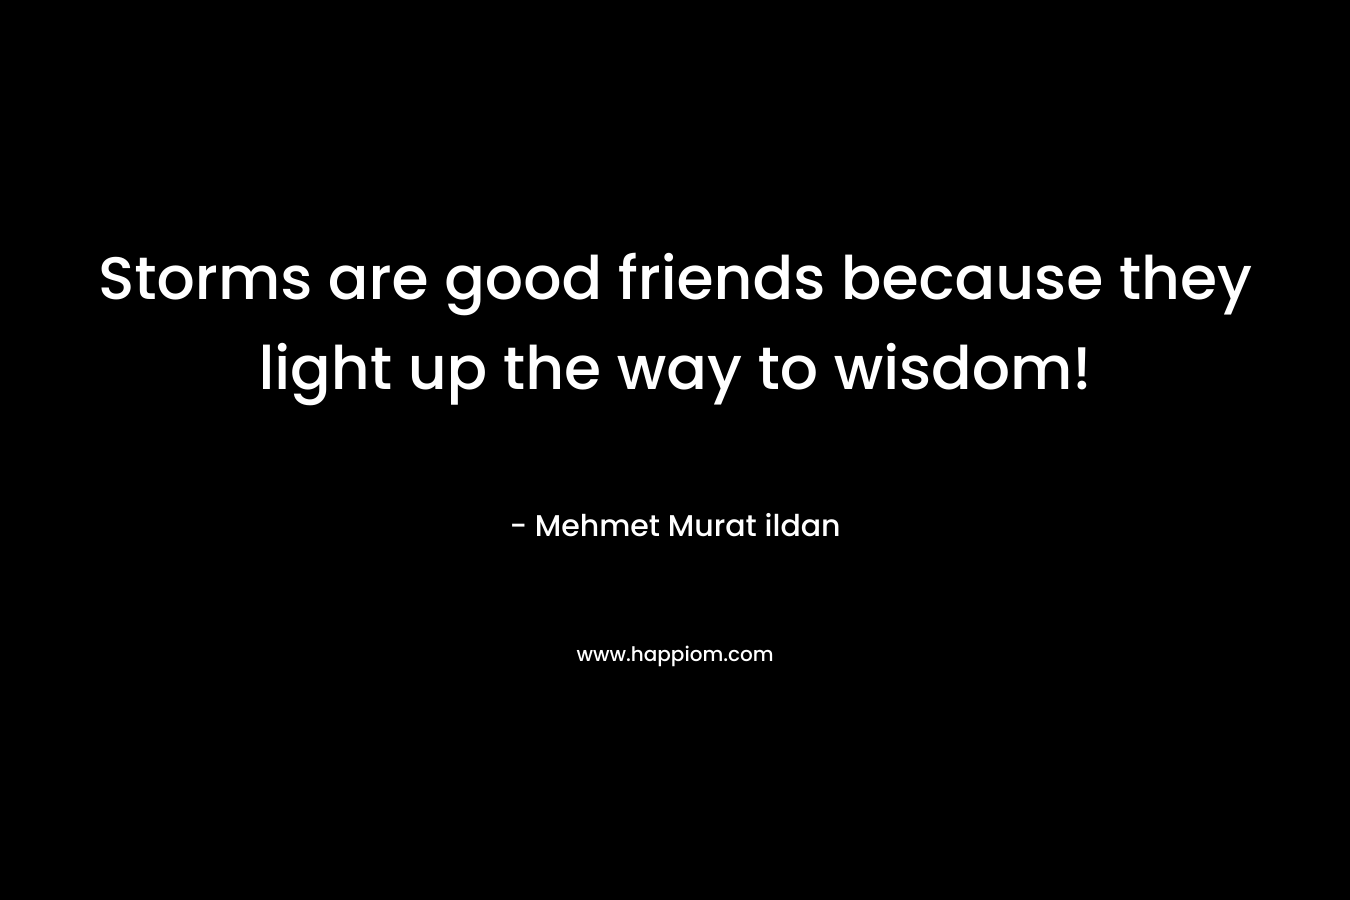 Storms are good friends because they light up the way to wisdom! – Mehmet Murat ildan